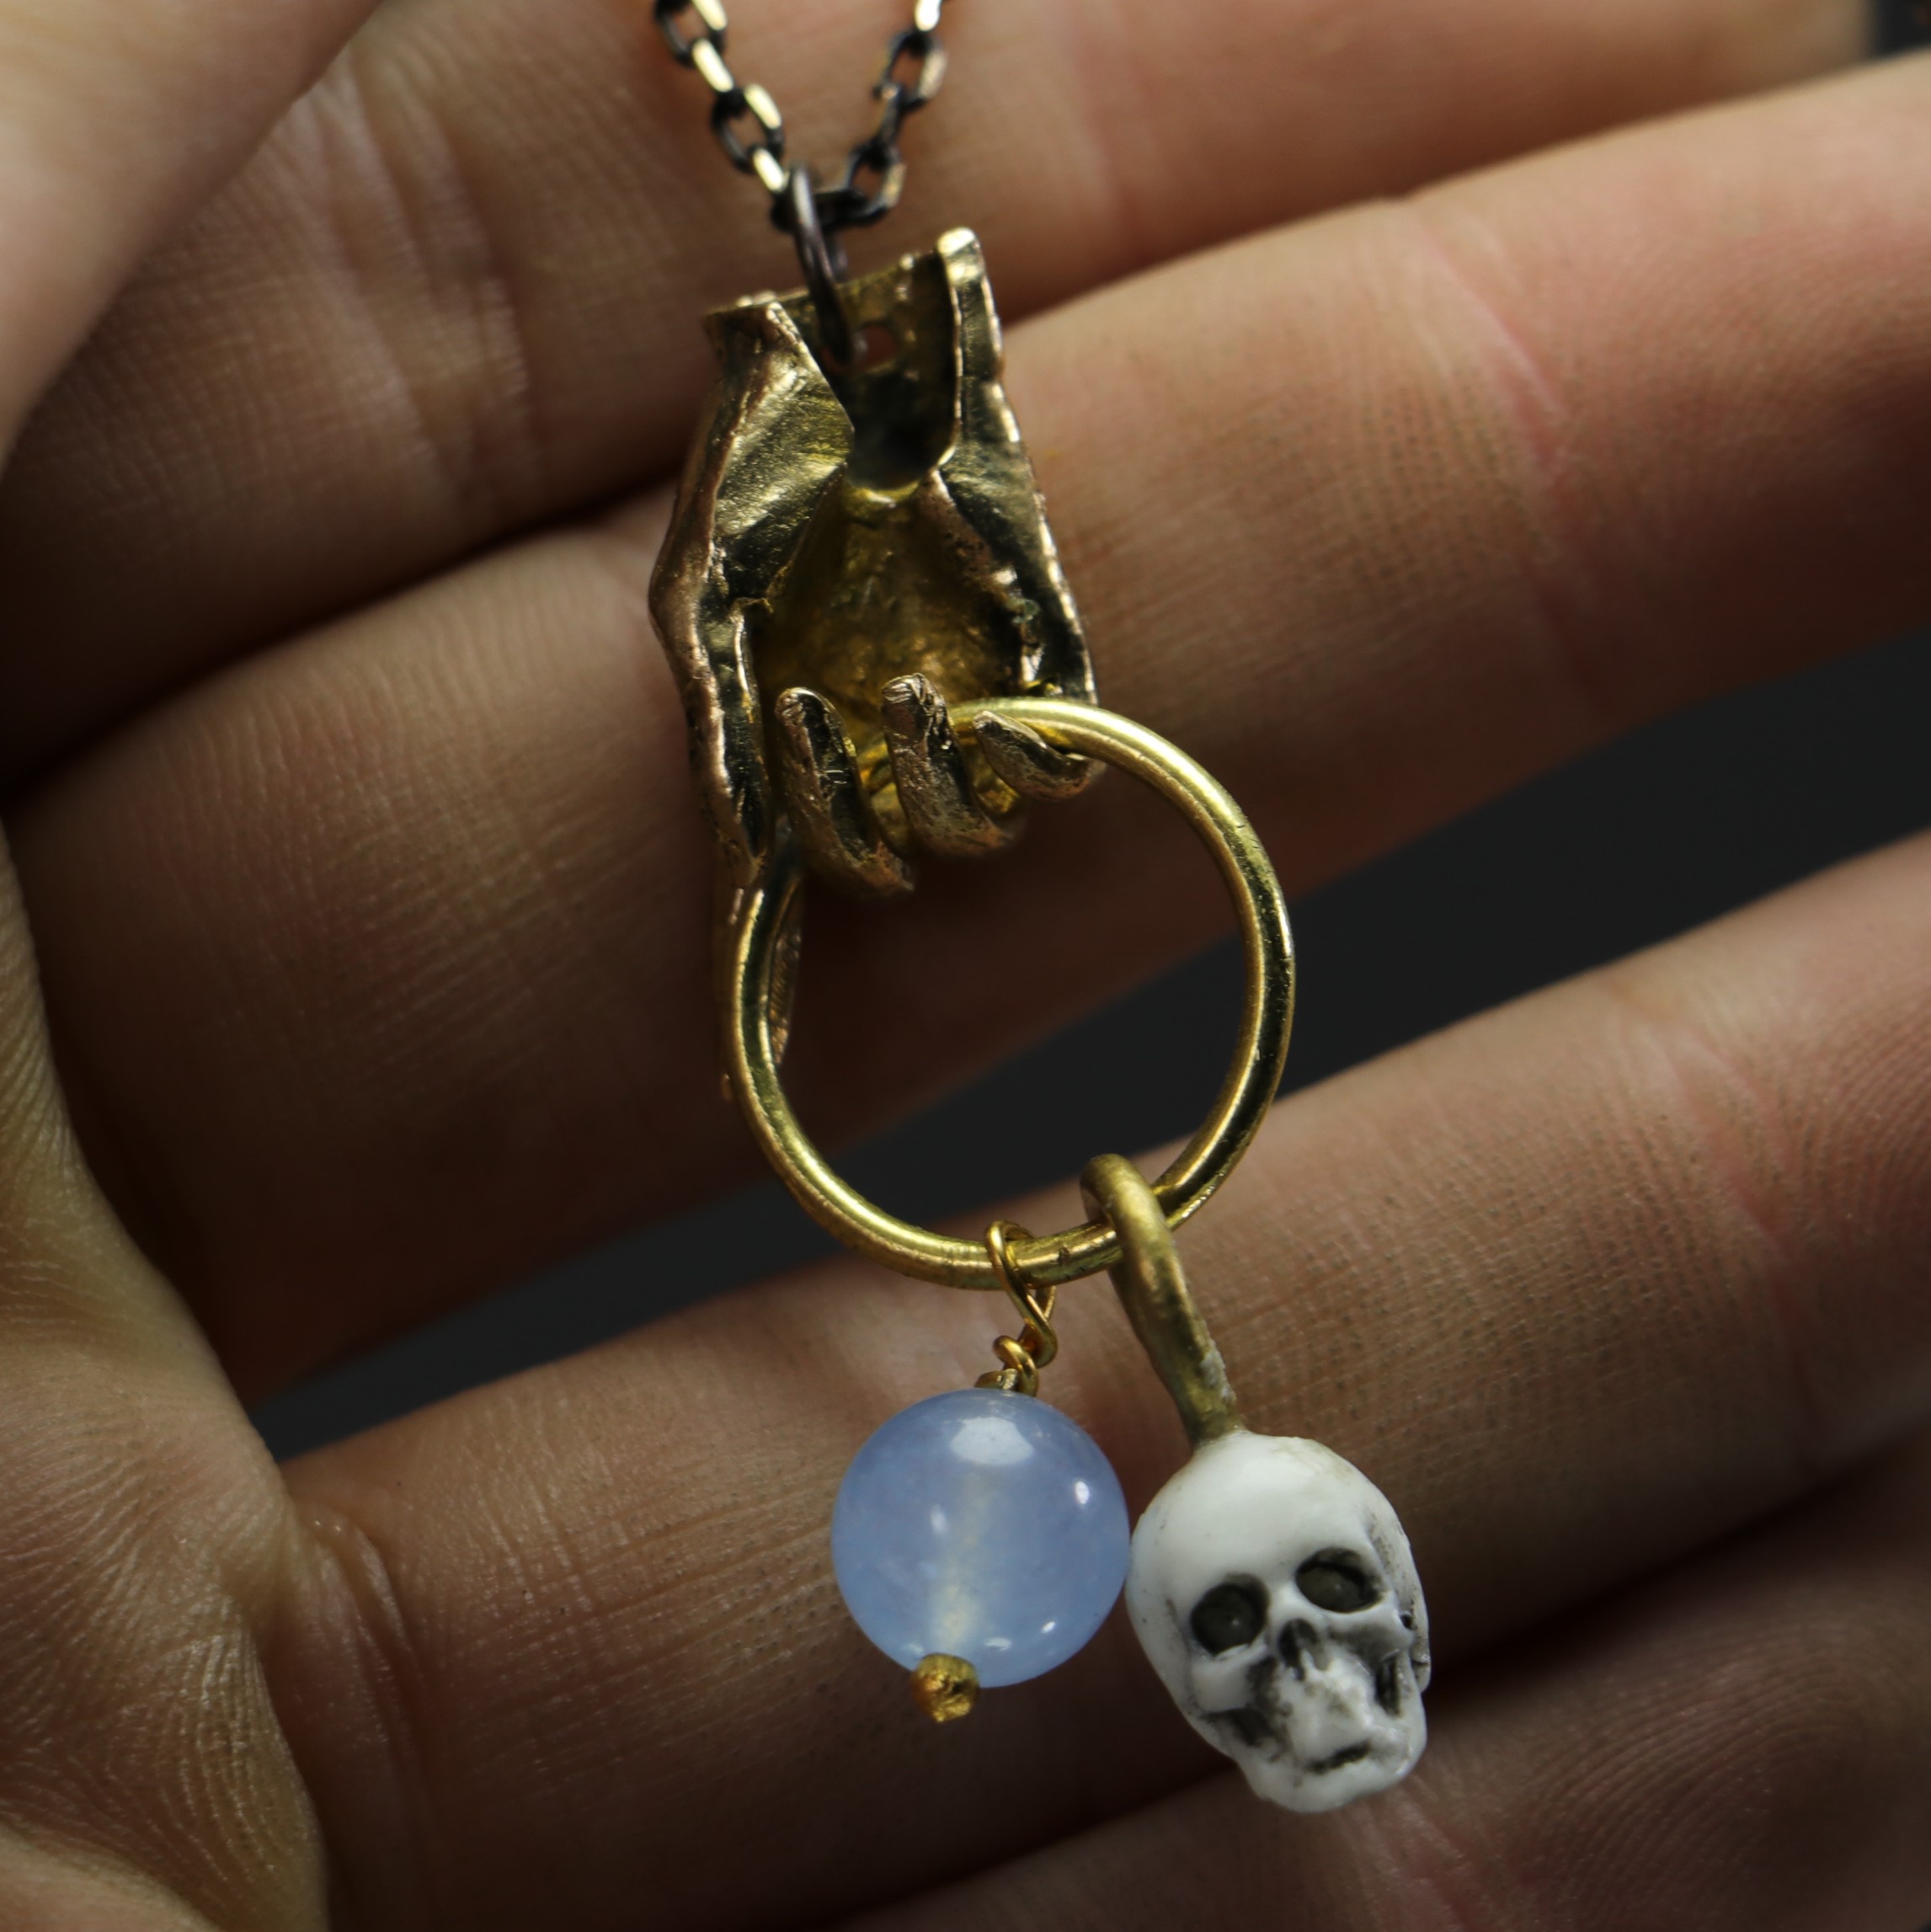 Hand and Skull Aquamarine Stone Necklace